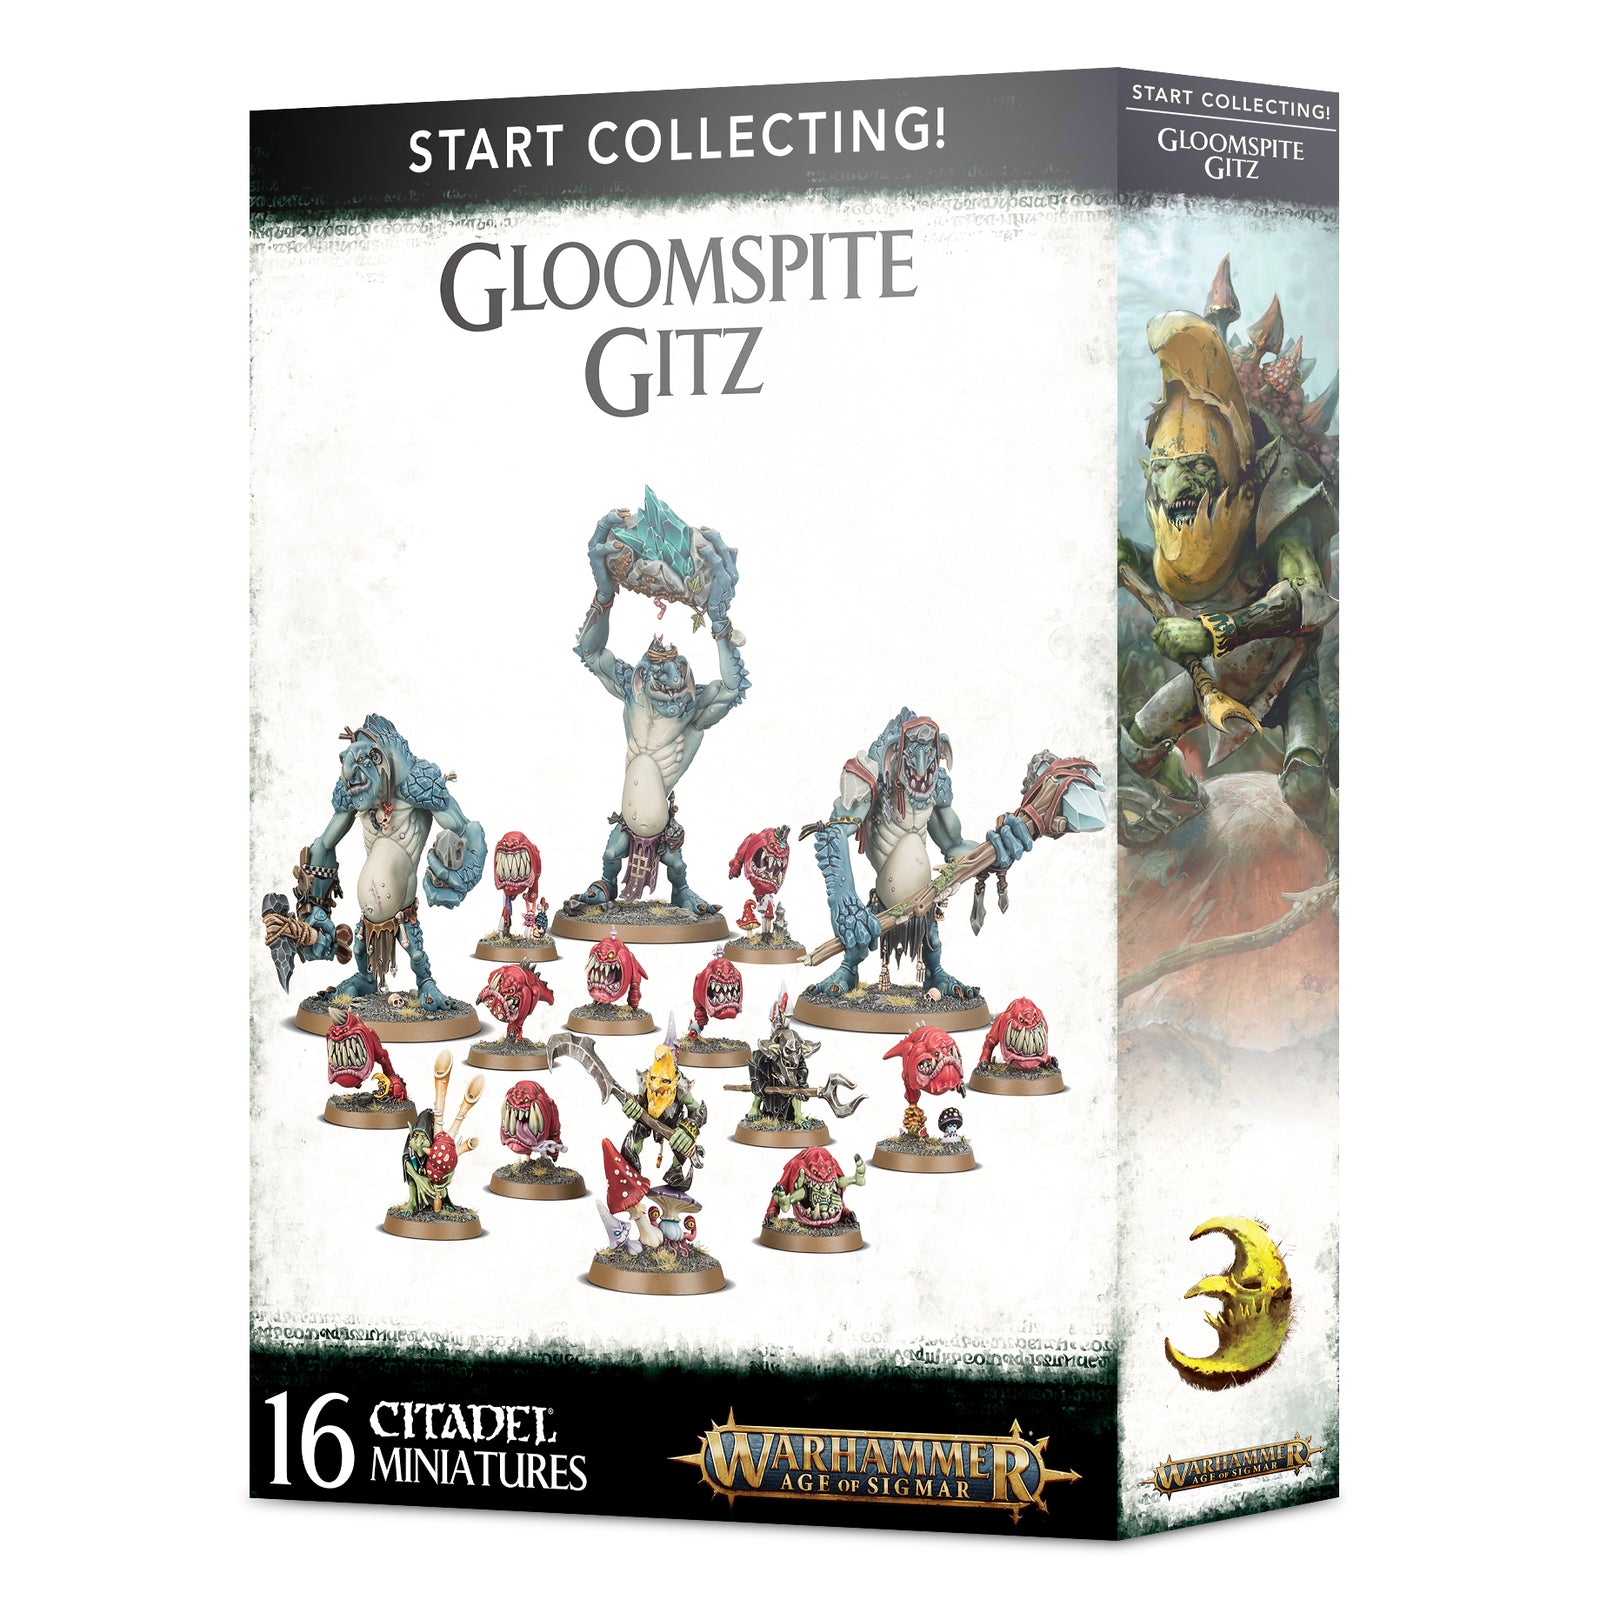 Box image for Start collecting gloomspite gitz